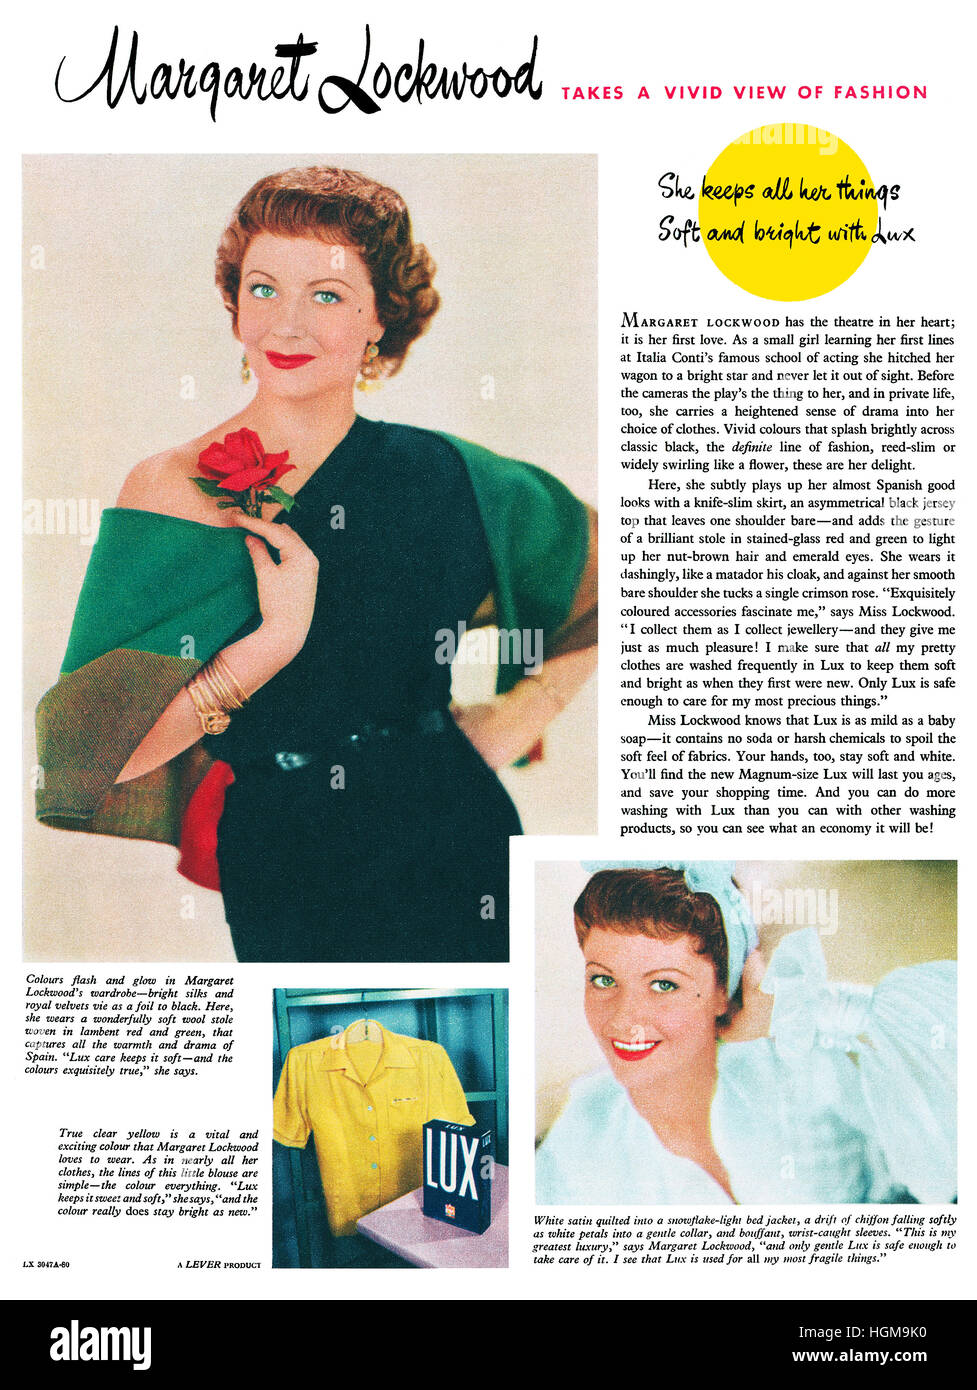 1952 British advertisement for Lux washing powder featuring actress Margaret Lockwood. Stock Photo